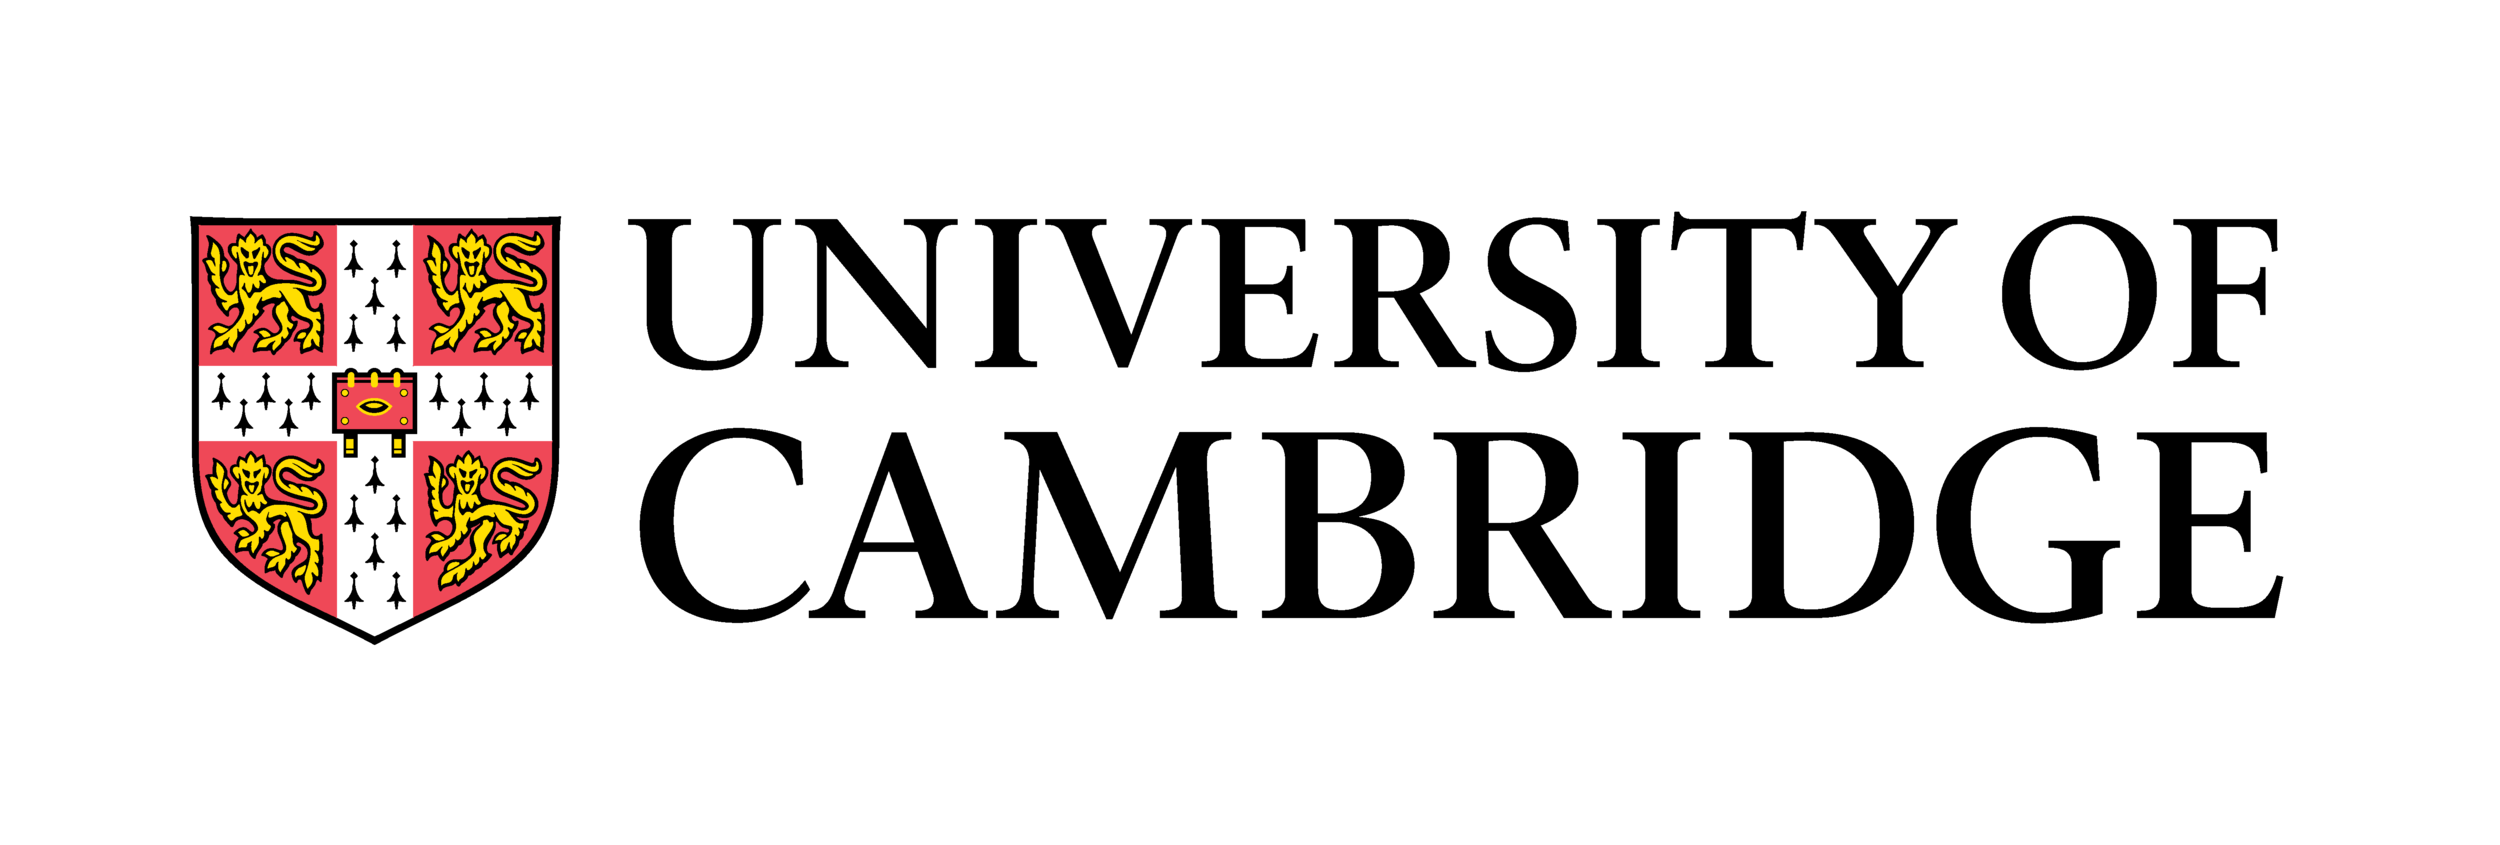 university-of-cambridge-logo-2.png